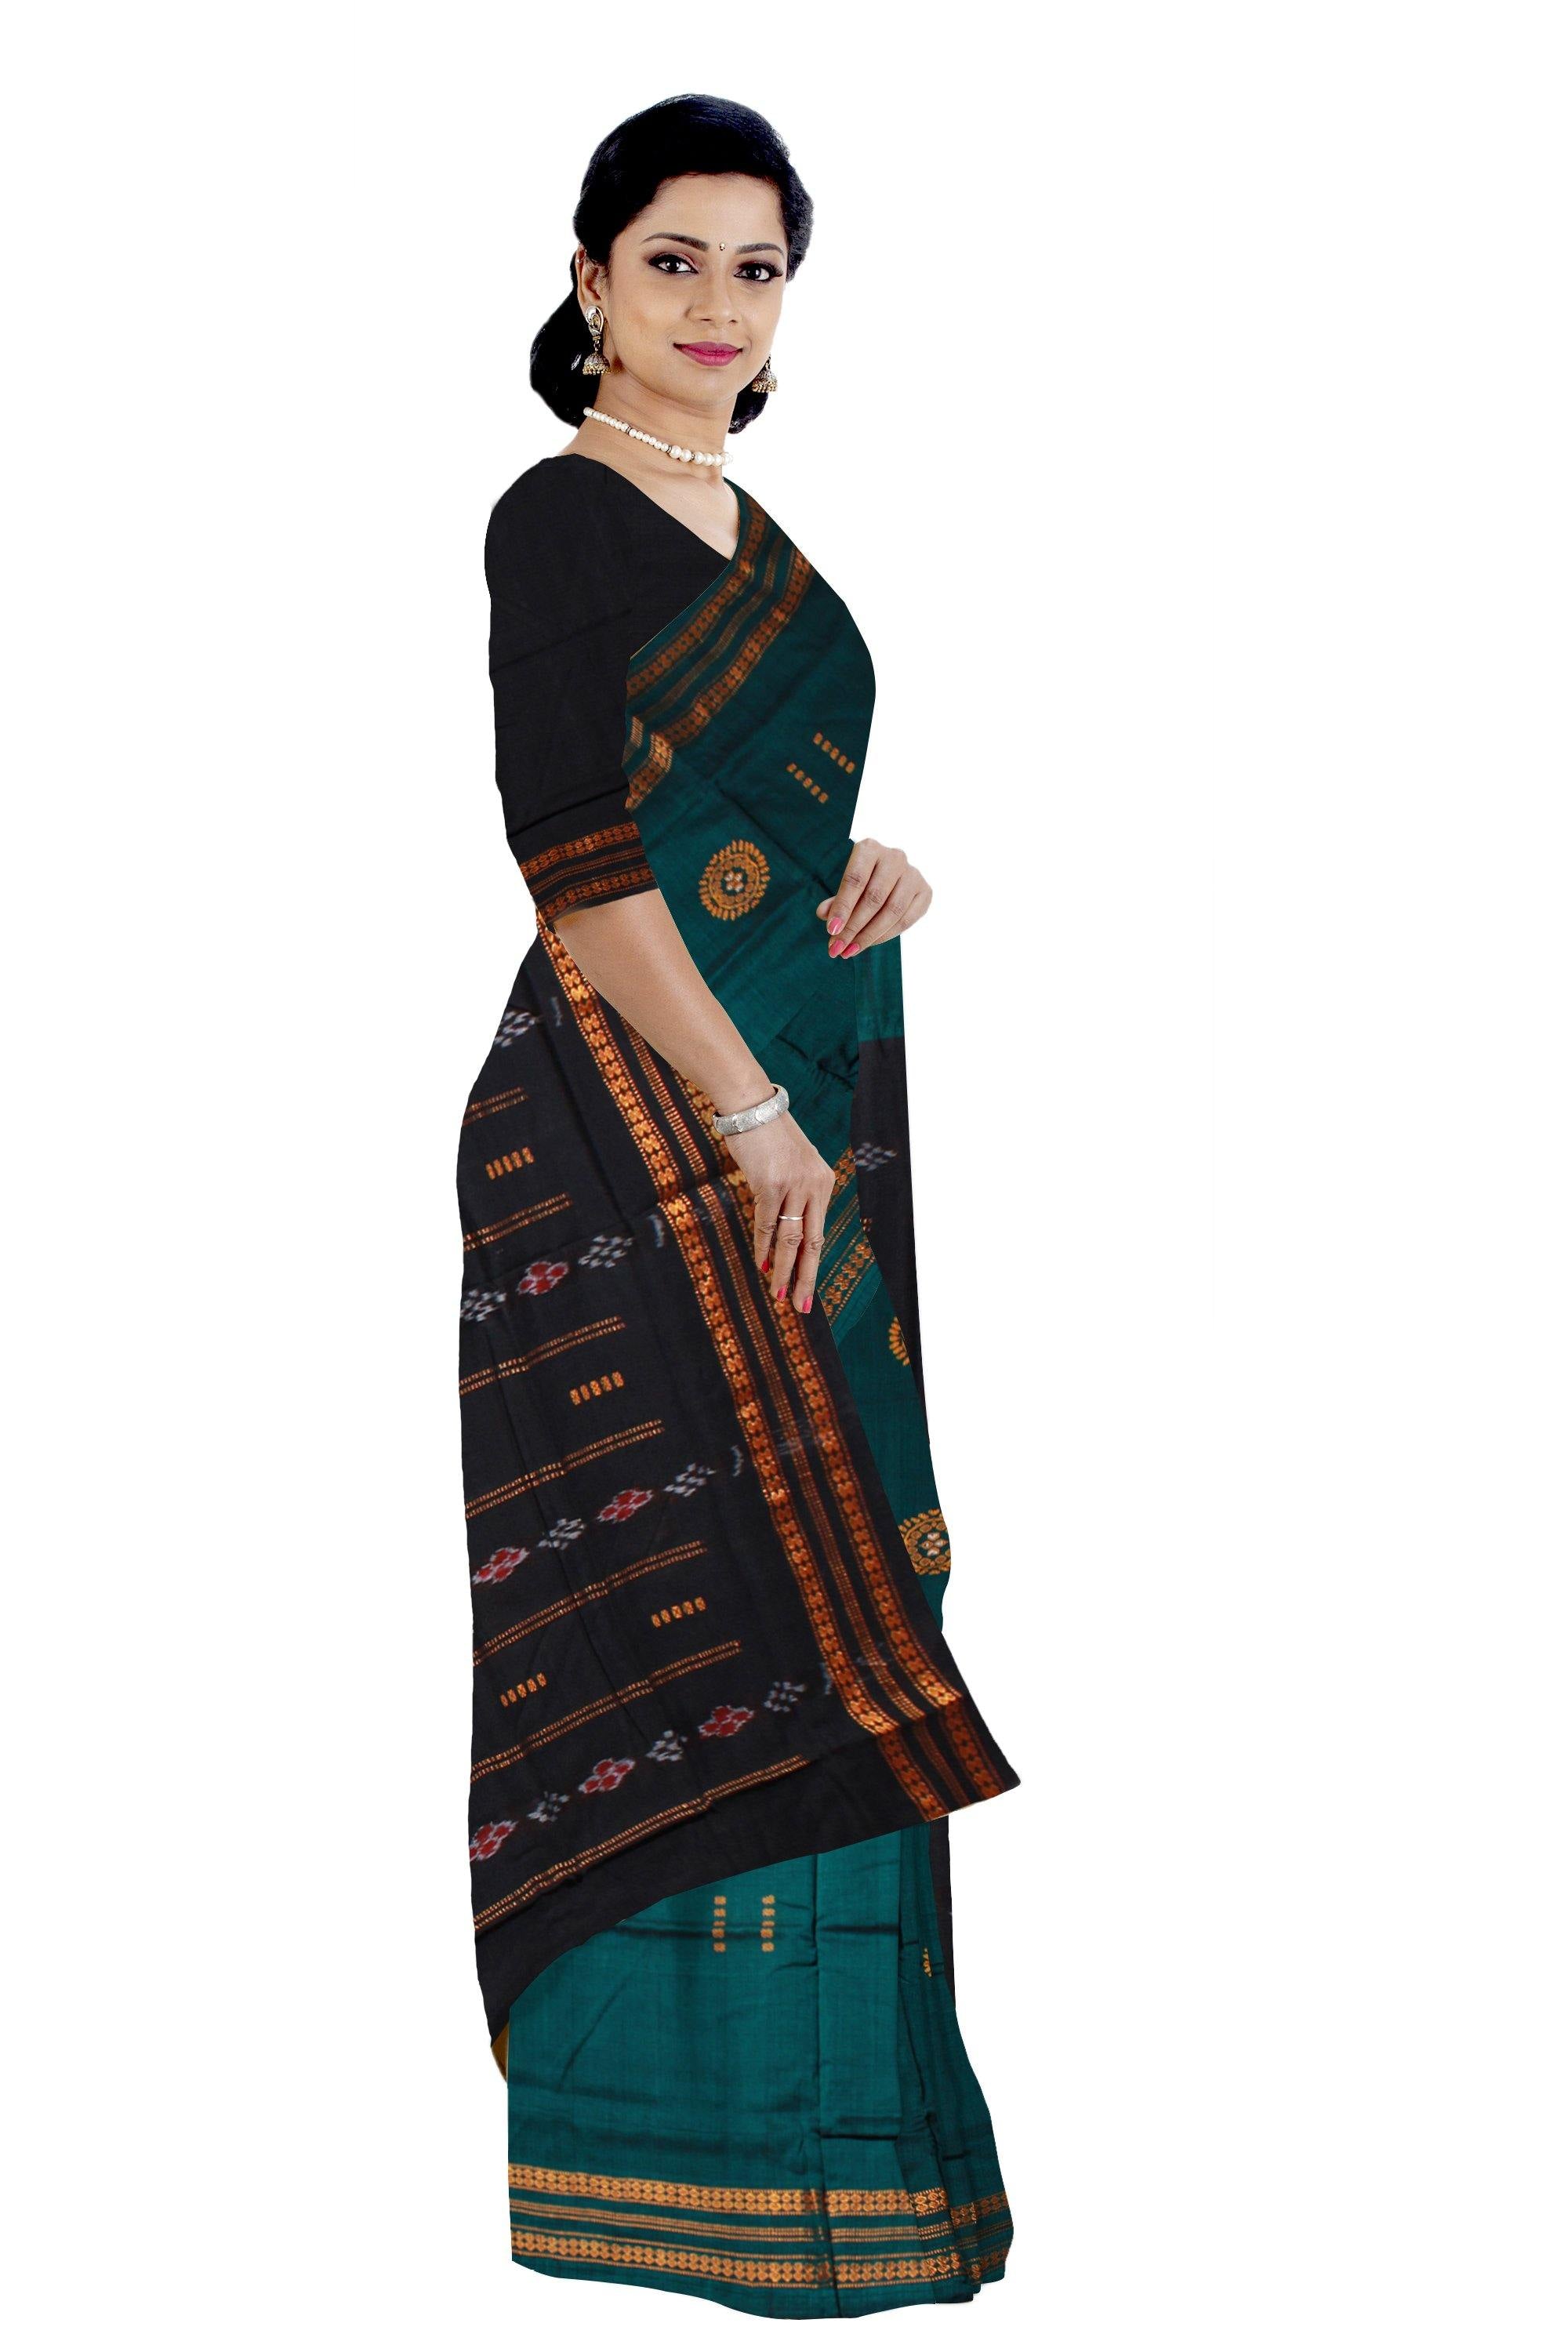 Sambalpuri Bomkei pattern flower print saree in Dark GREEN color without blouse piece - Koshali Arts & Crafts Enterprise